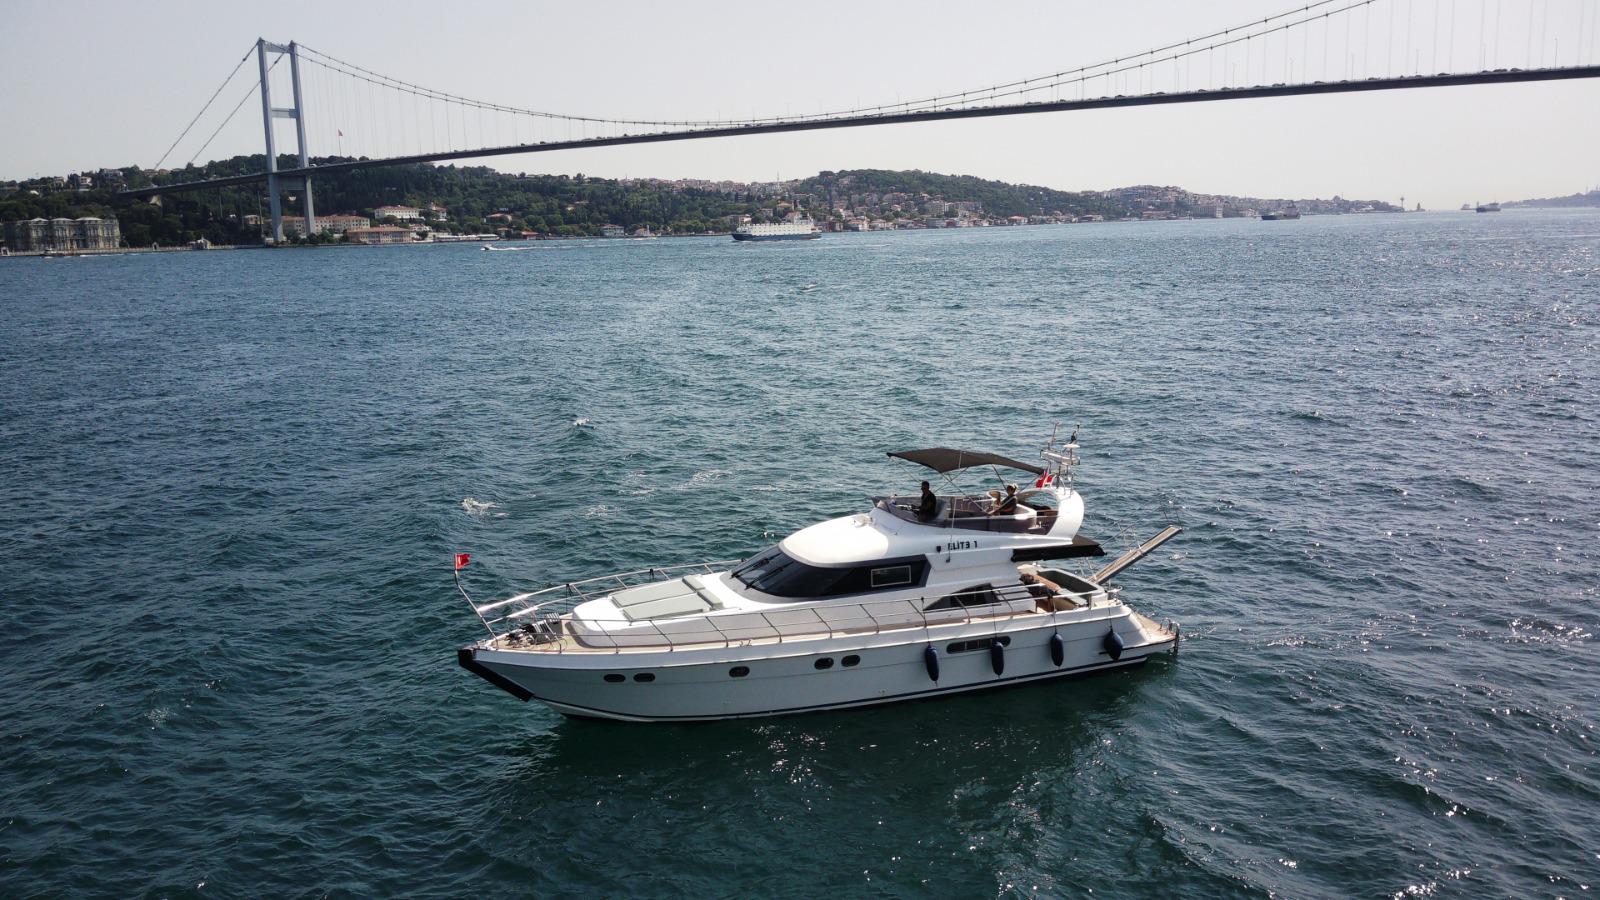 Tekneorganizasyonu.com ile İstanbul Yat Kiralama Hizmeti